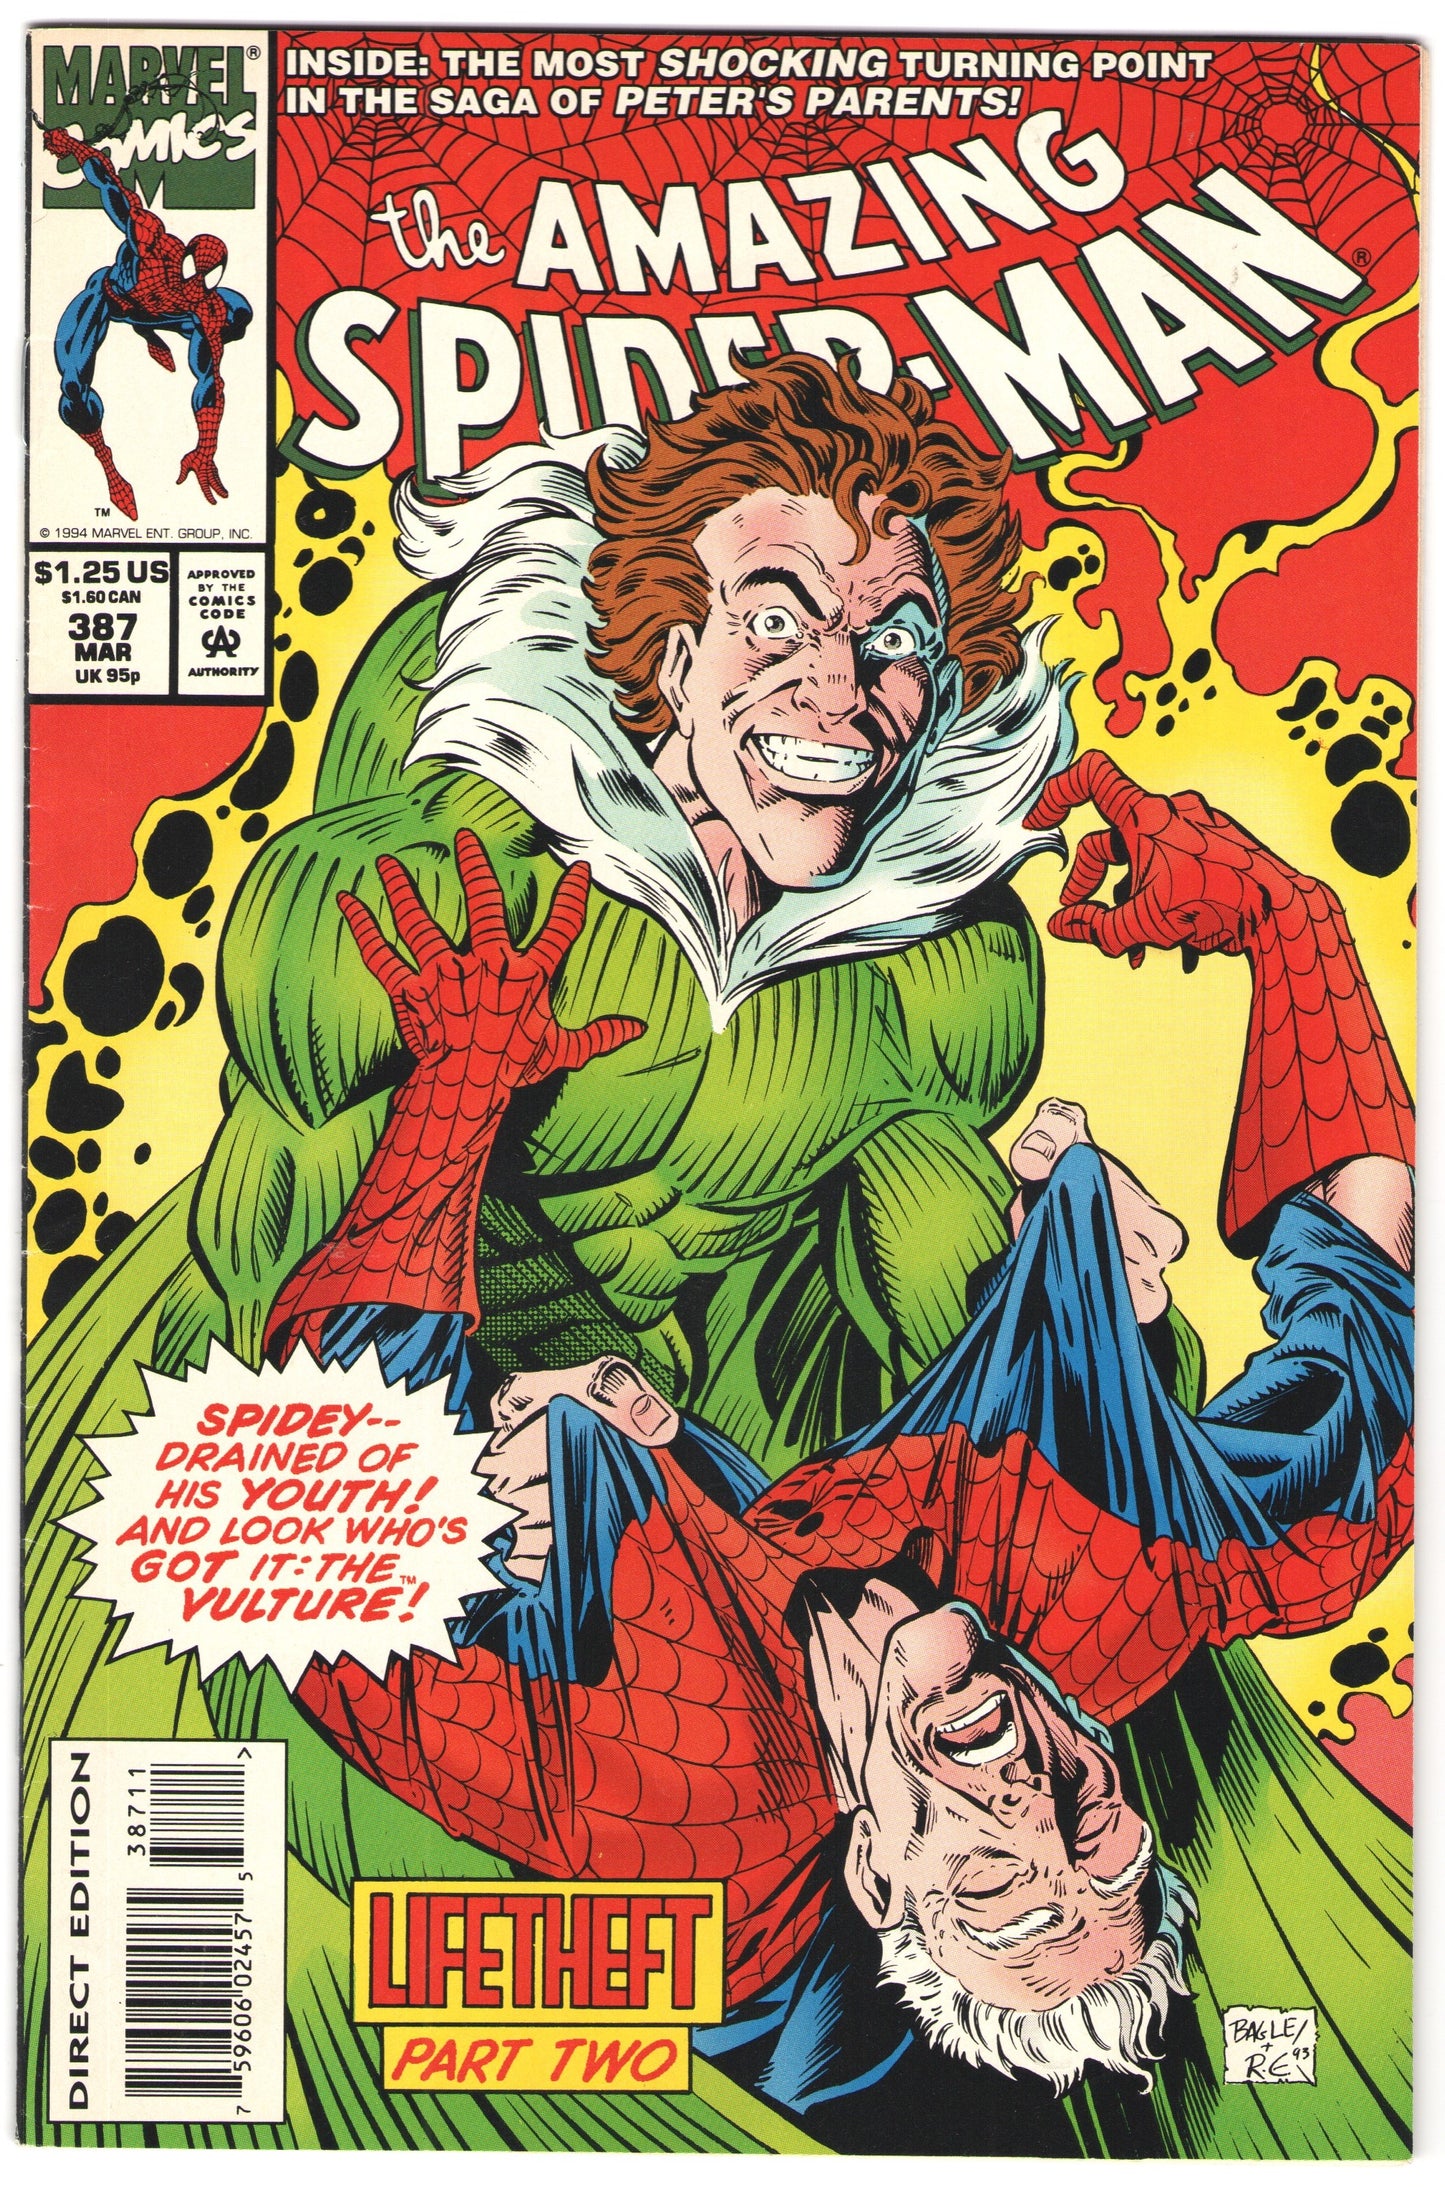 Amazing Spider-Man "Lifetheft" Complete Story Arc #386-388 (1994)